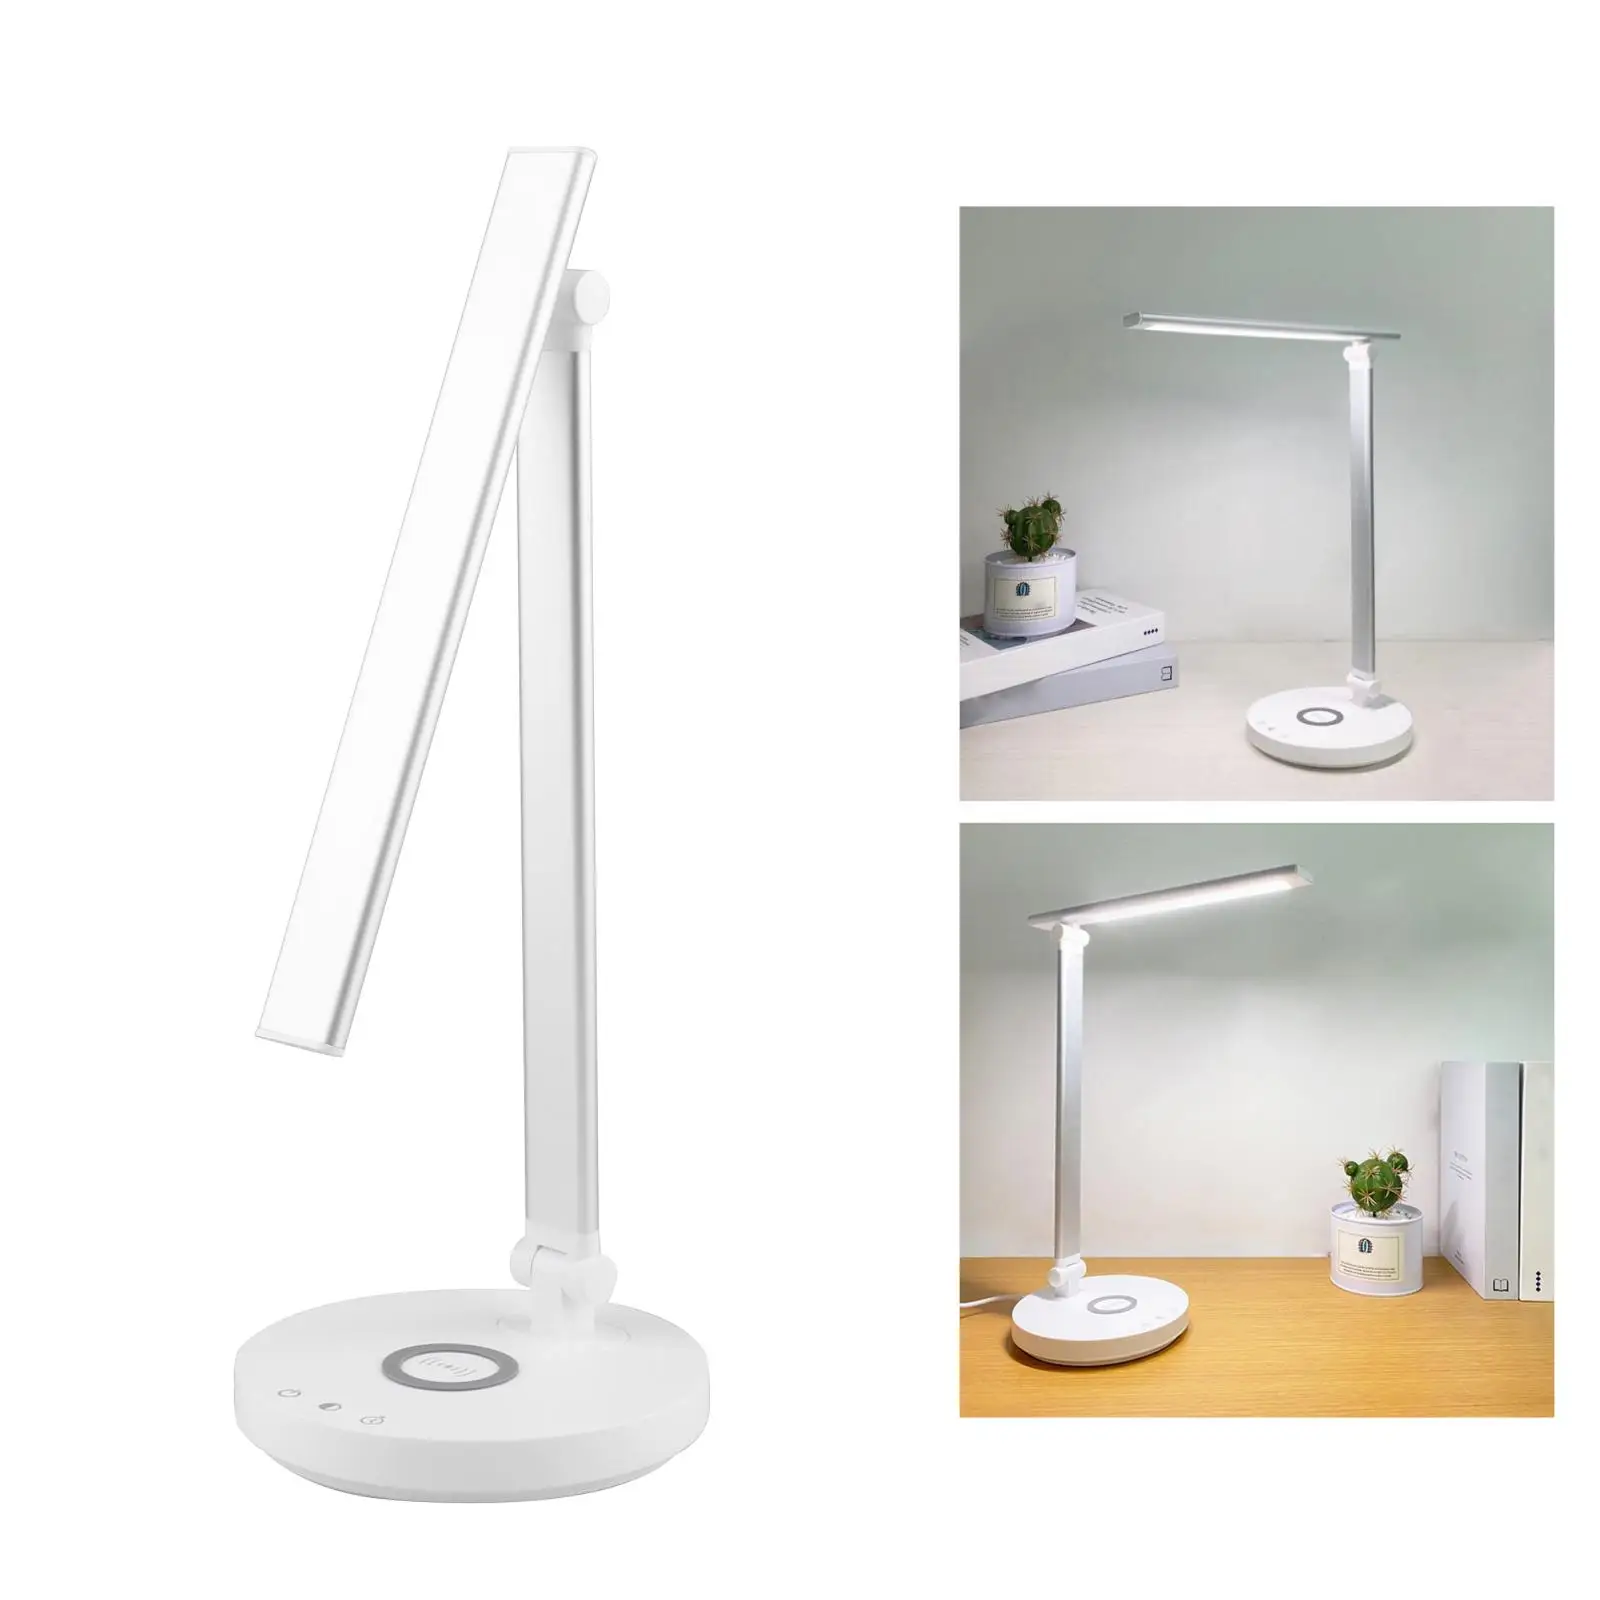 USB Reading LED Night Light Bed Desk Lamp Wireless Charging Home Office Children